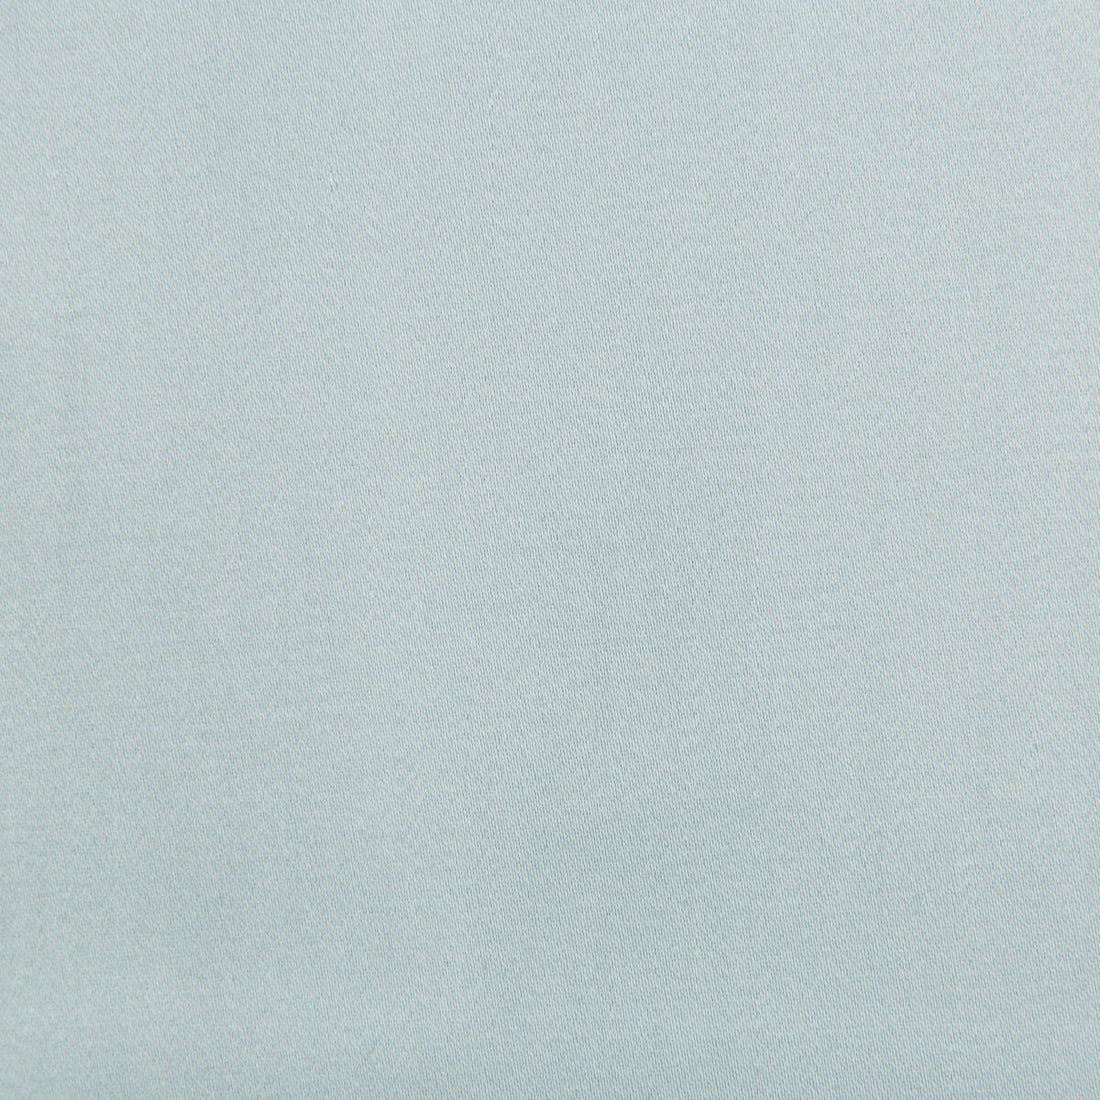 Manzanares fabric in azul cielo color - pattern LCT5480.003.0 - by Gaston y Daniela in the Lorenzo Castillo IV collection